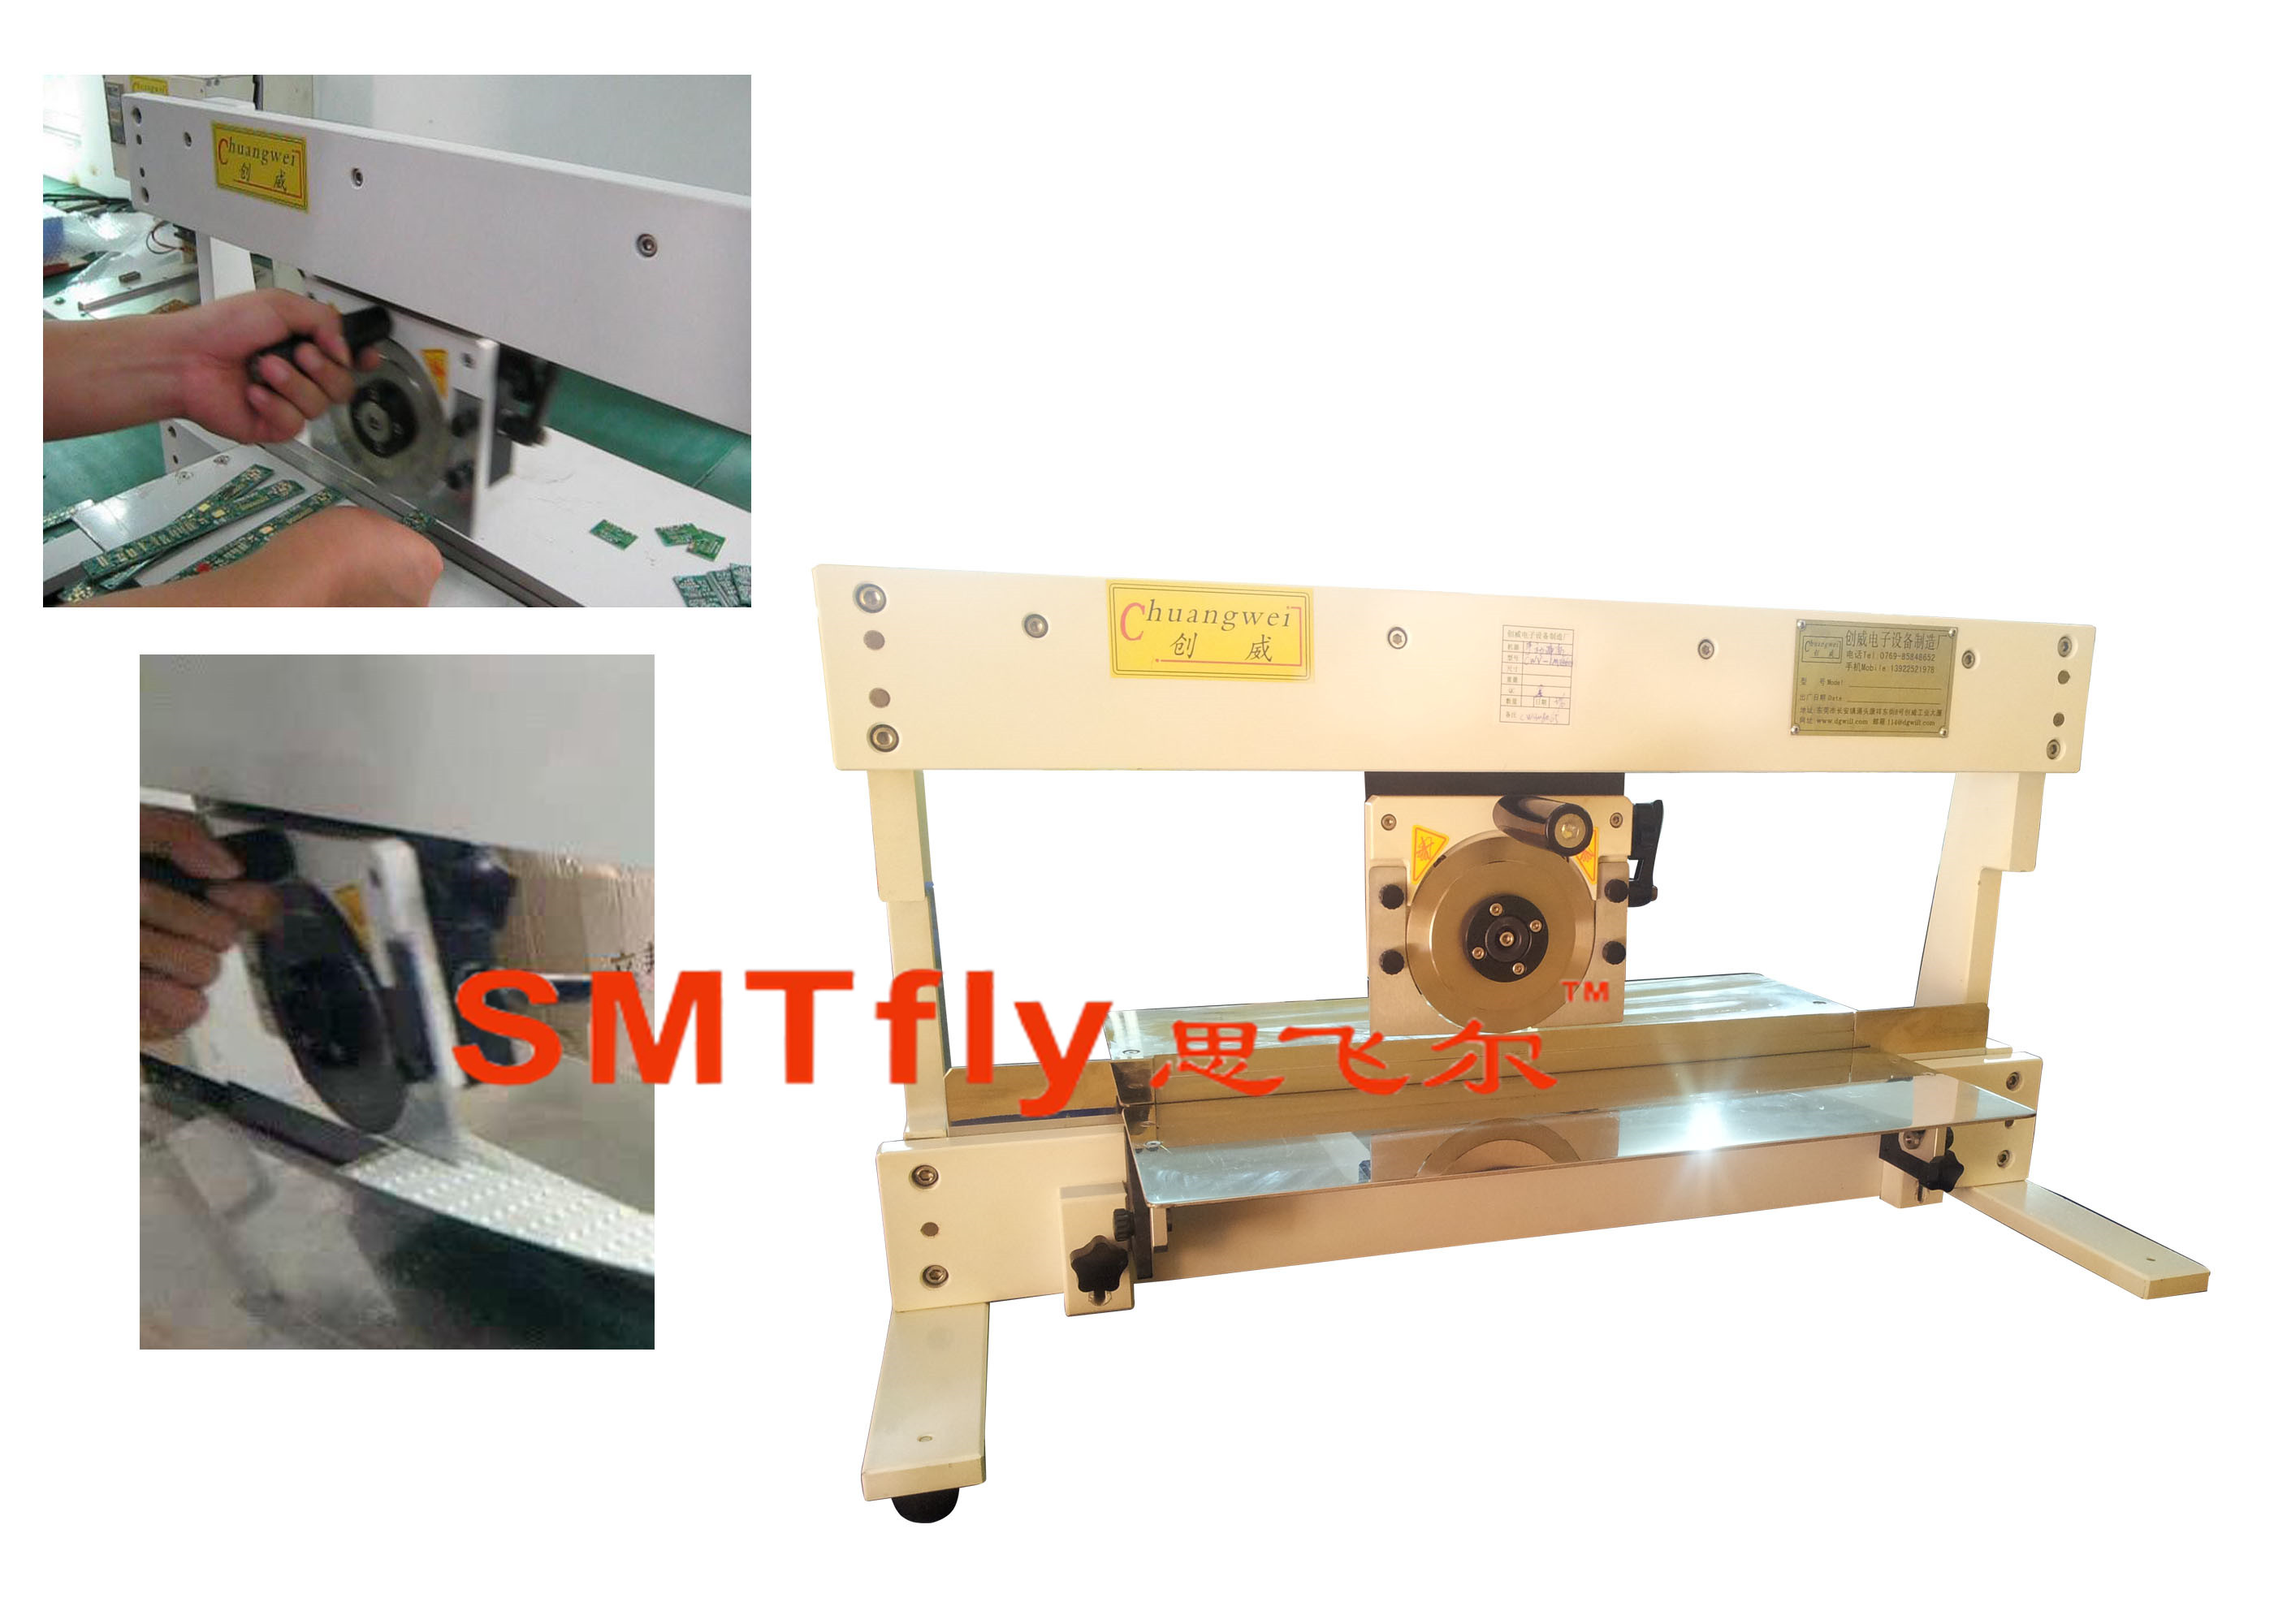 Manual PCB Cutting Machine,SMTfly-1M